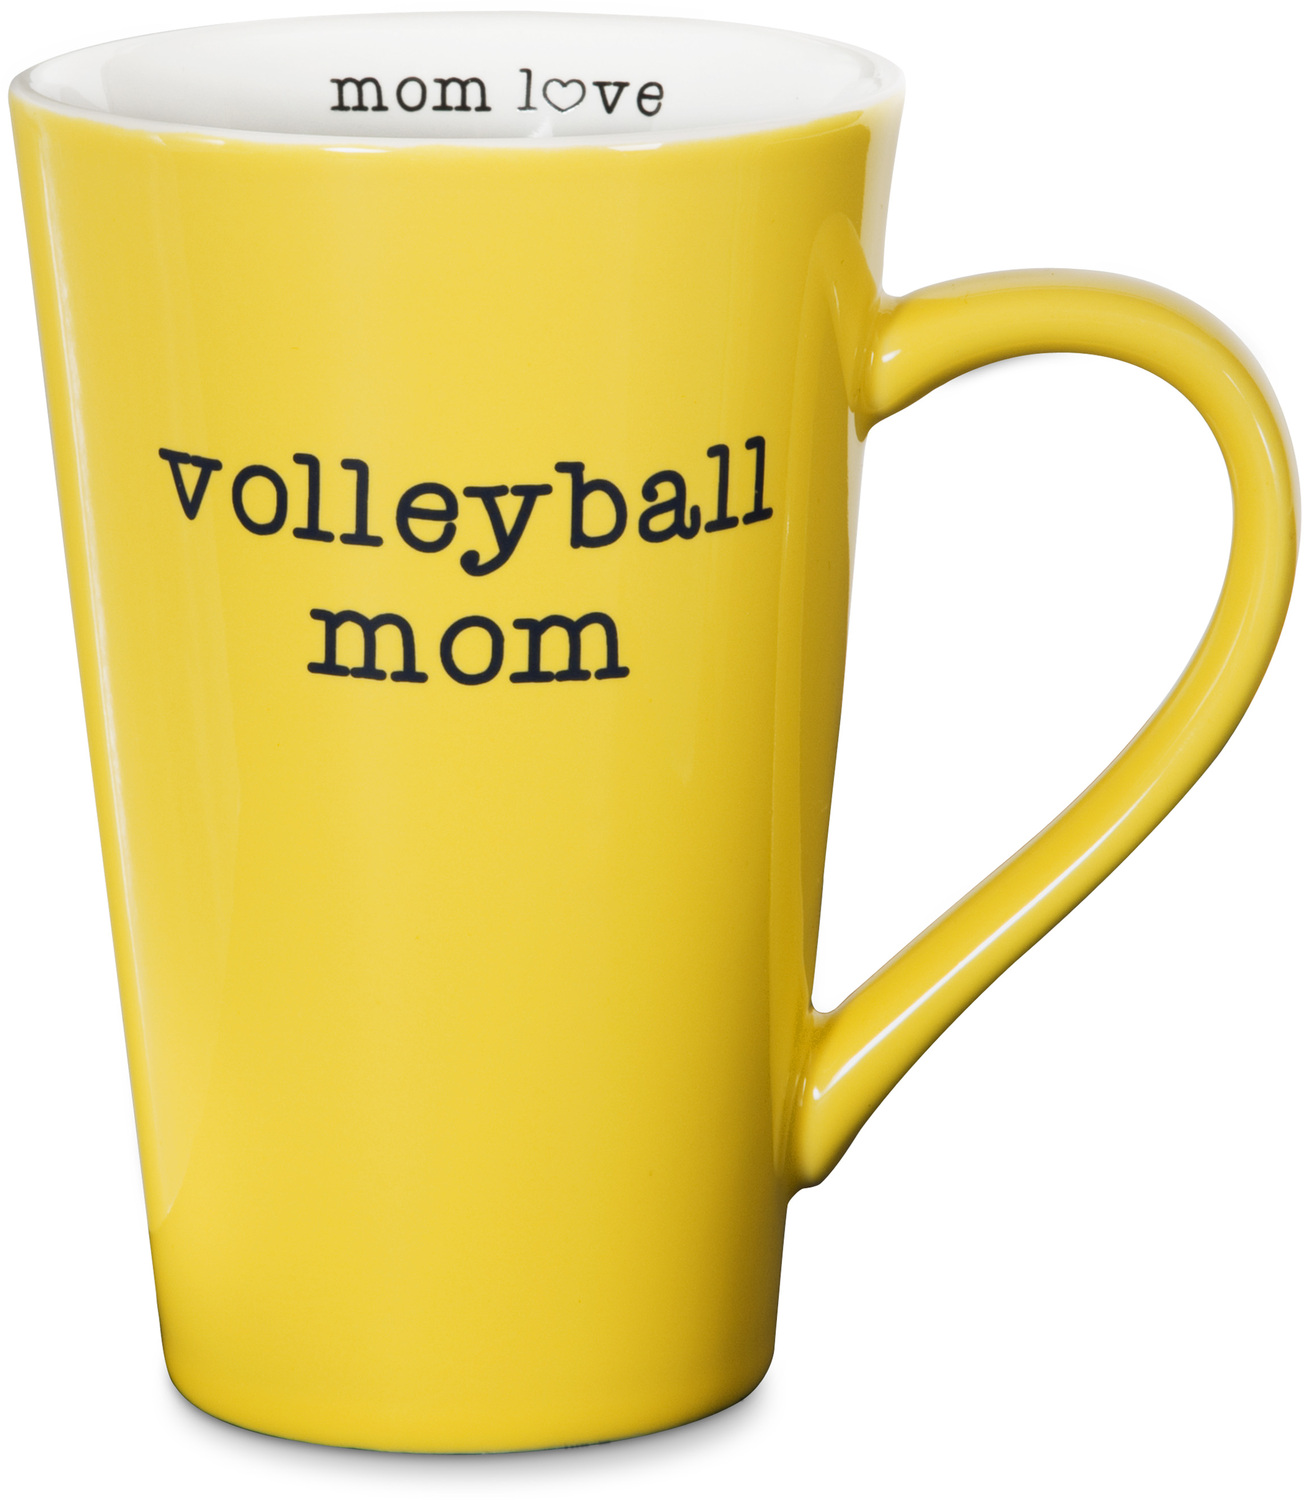 Volleyball Mom by Mom Love - Volleyball Mom - 5.5" -  18 oz Latte Mug